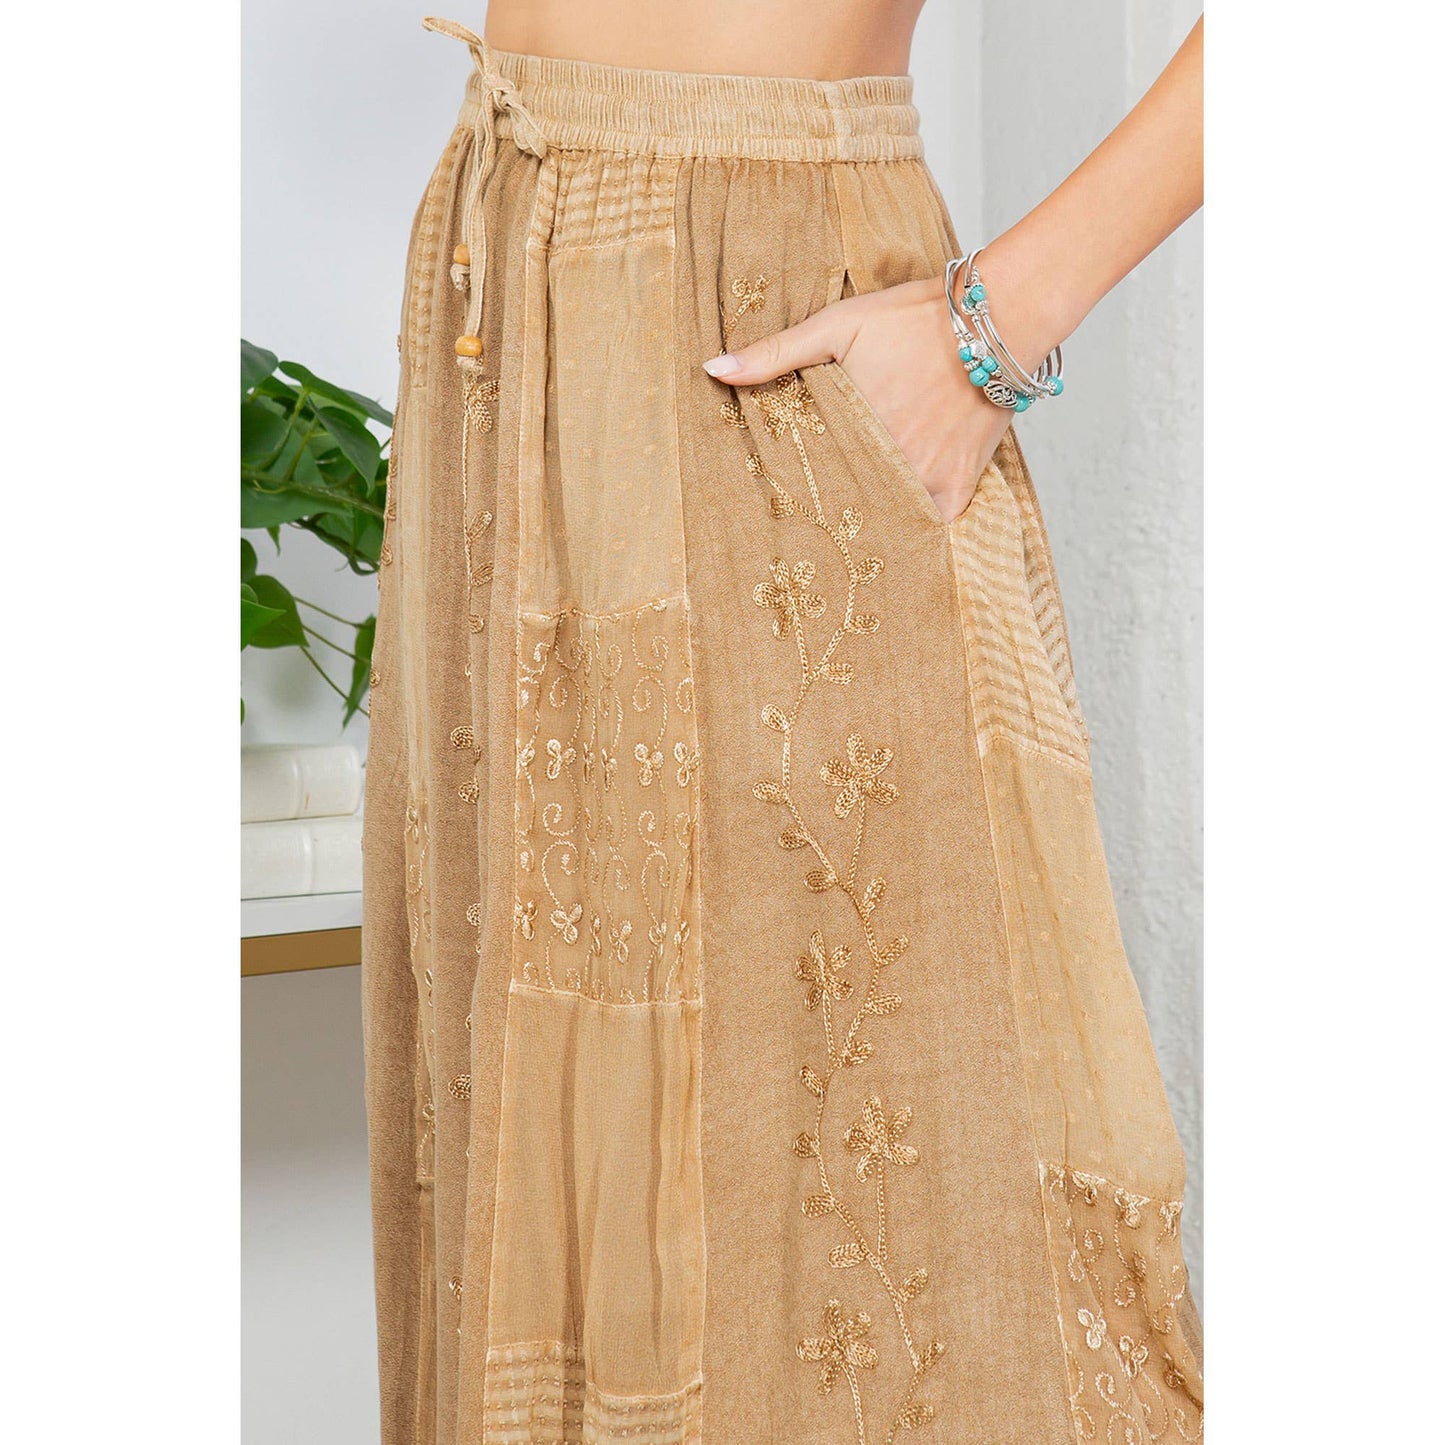 Gypsy Rhapsody Skirt with Aari Embroidery - Camel